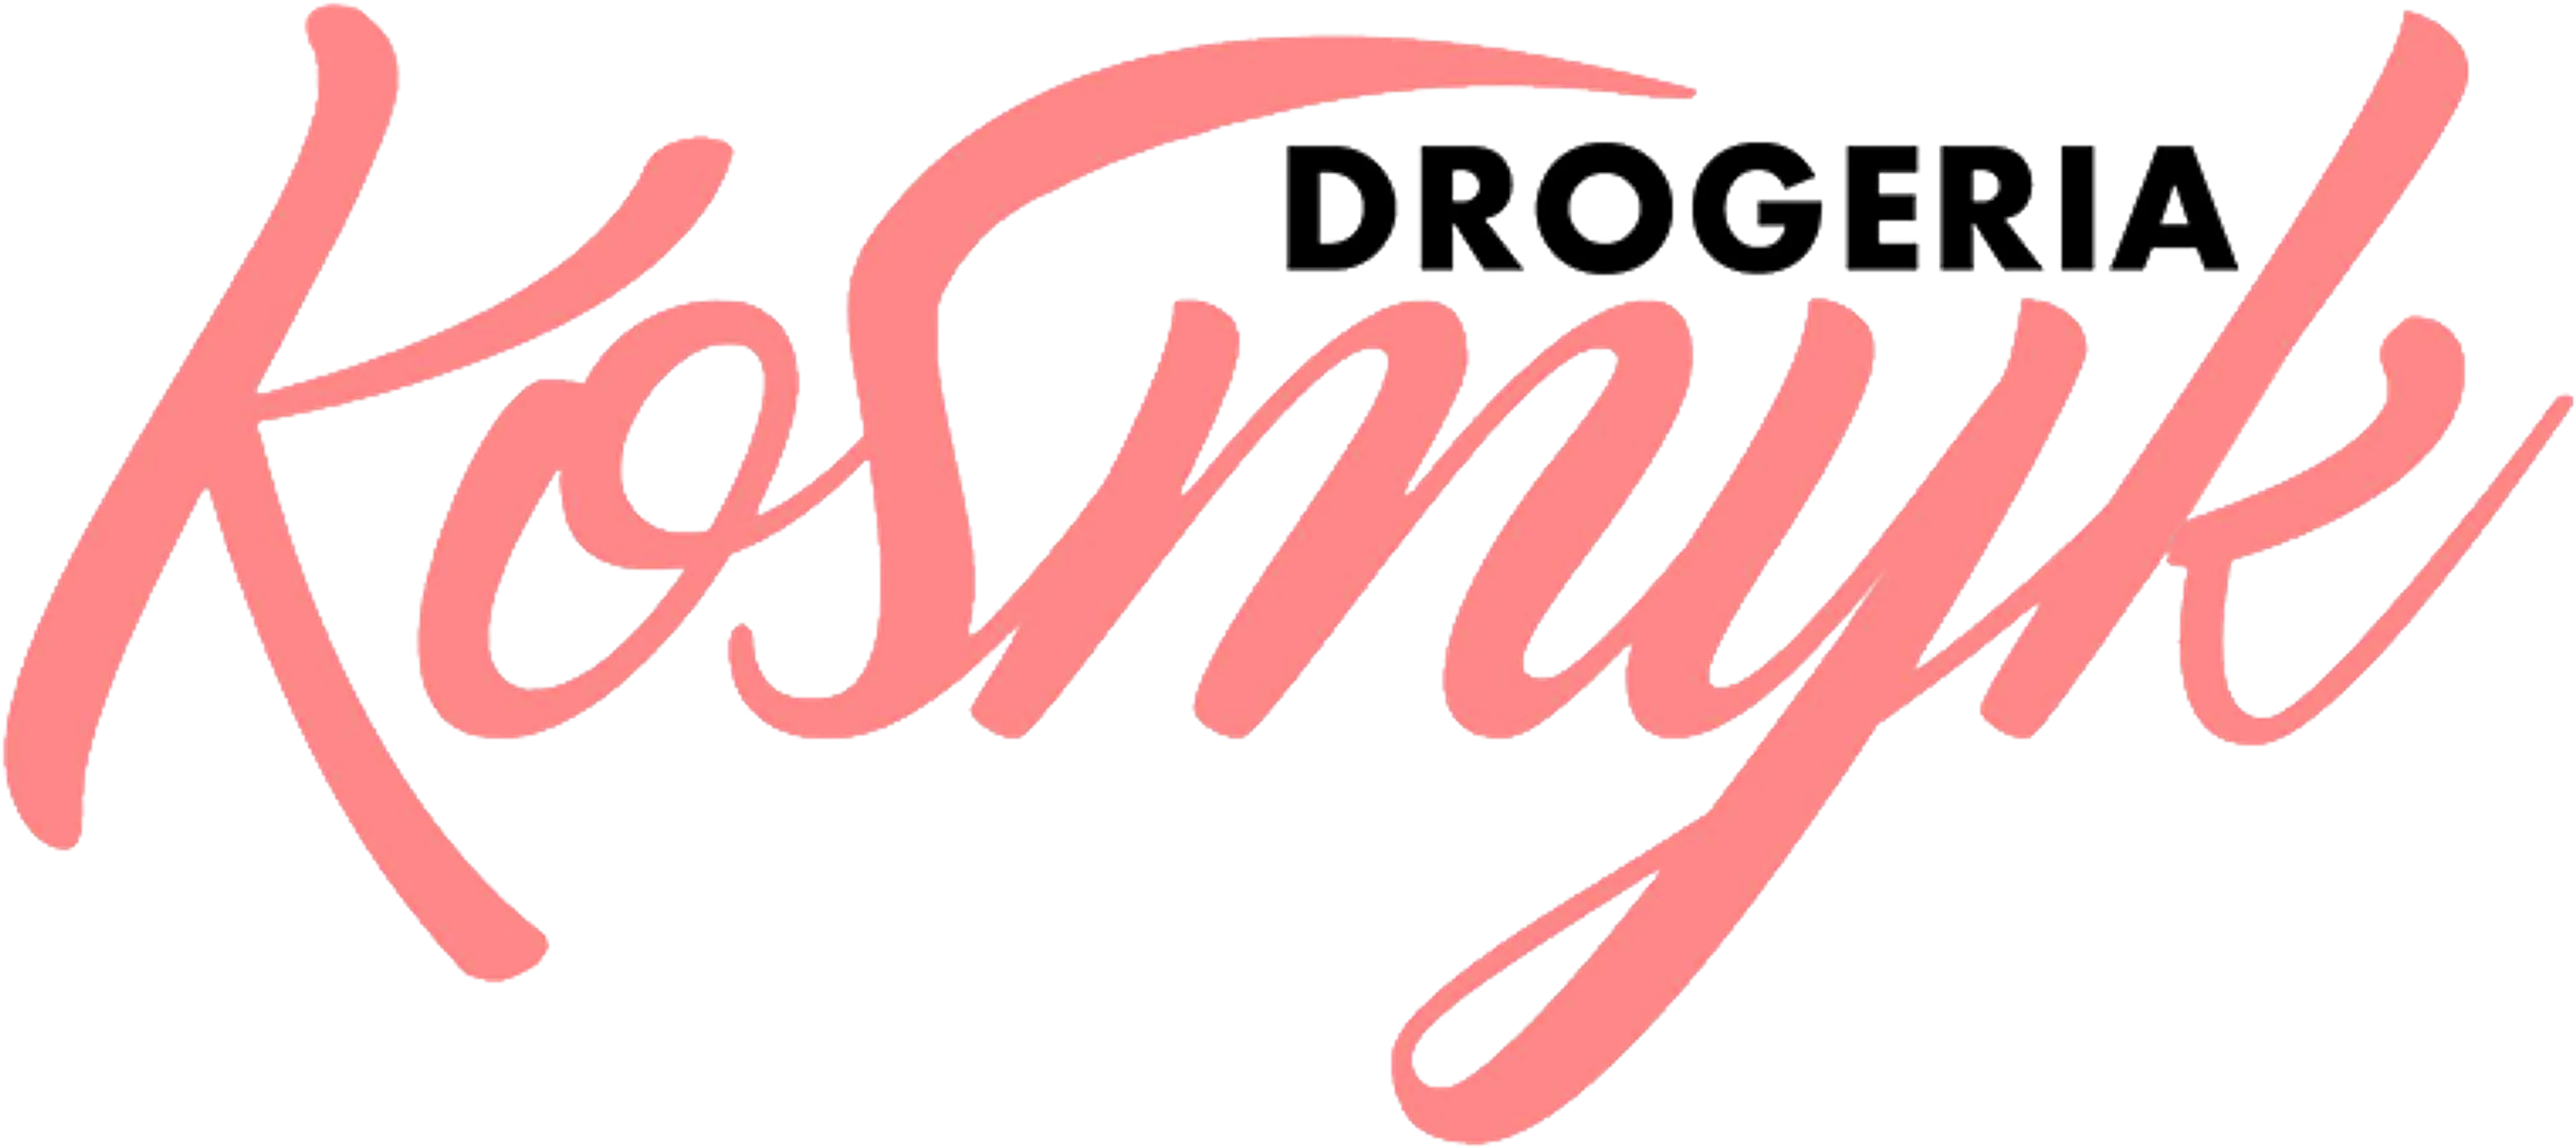  DROGERII KOSMYK logo